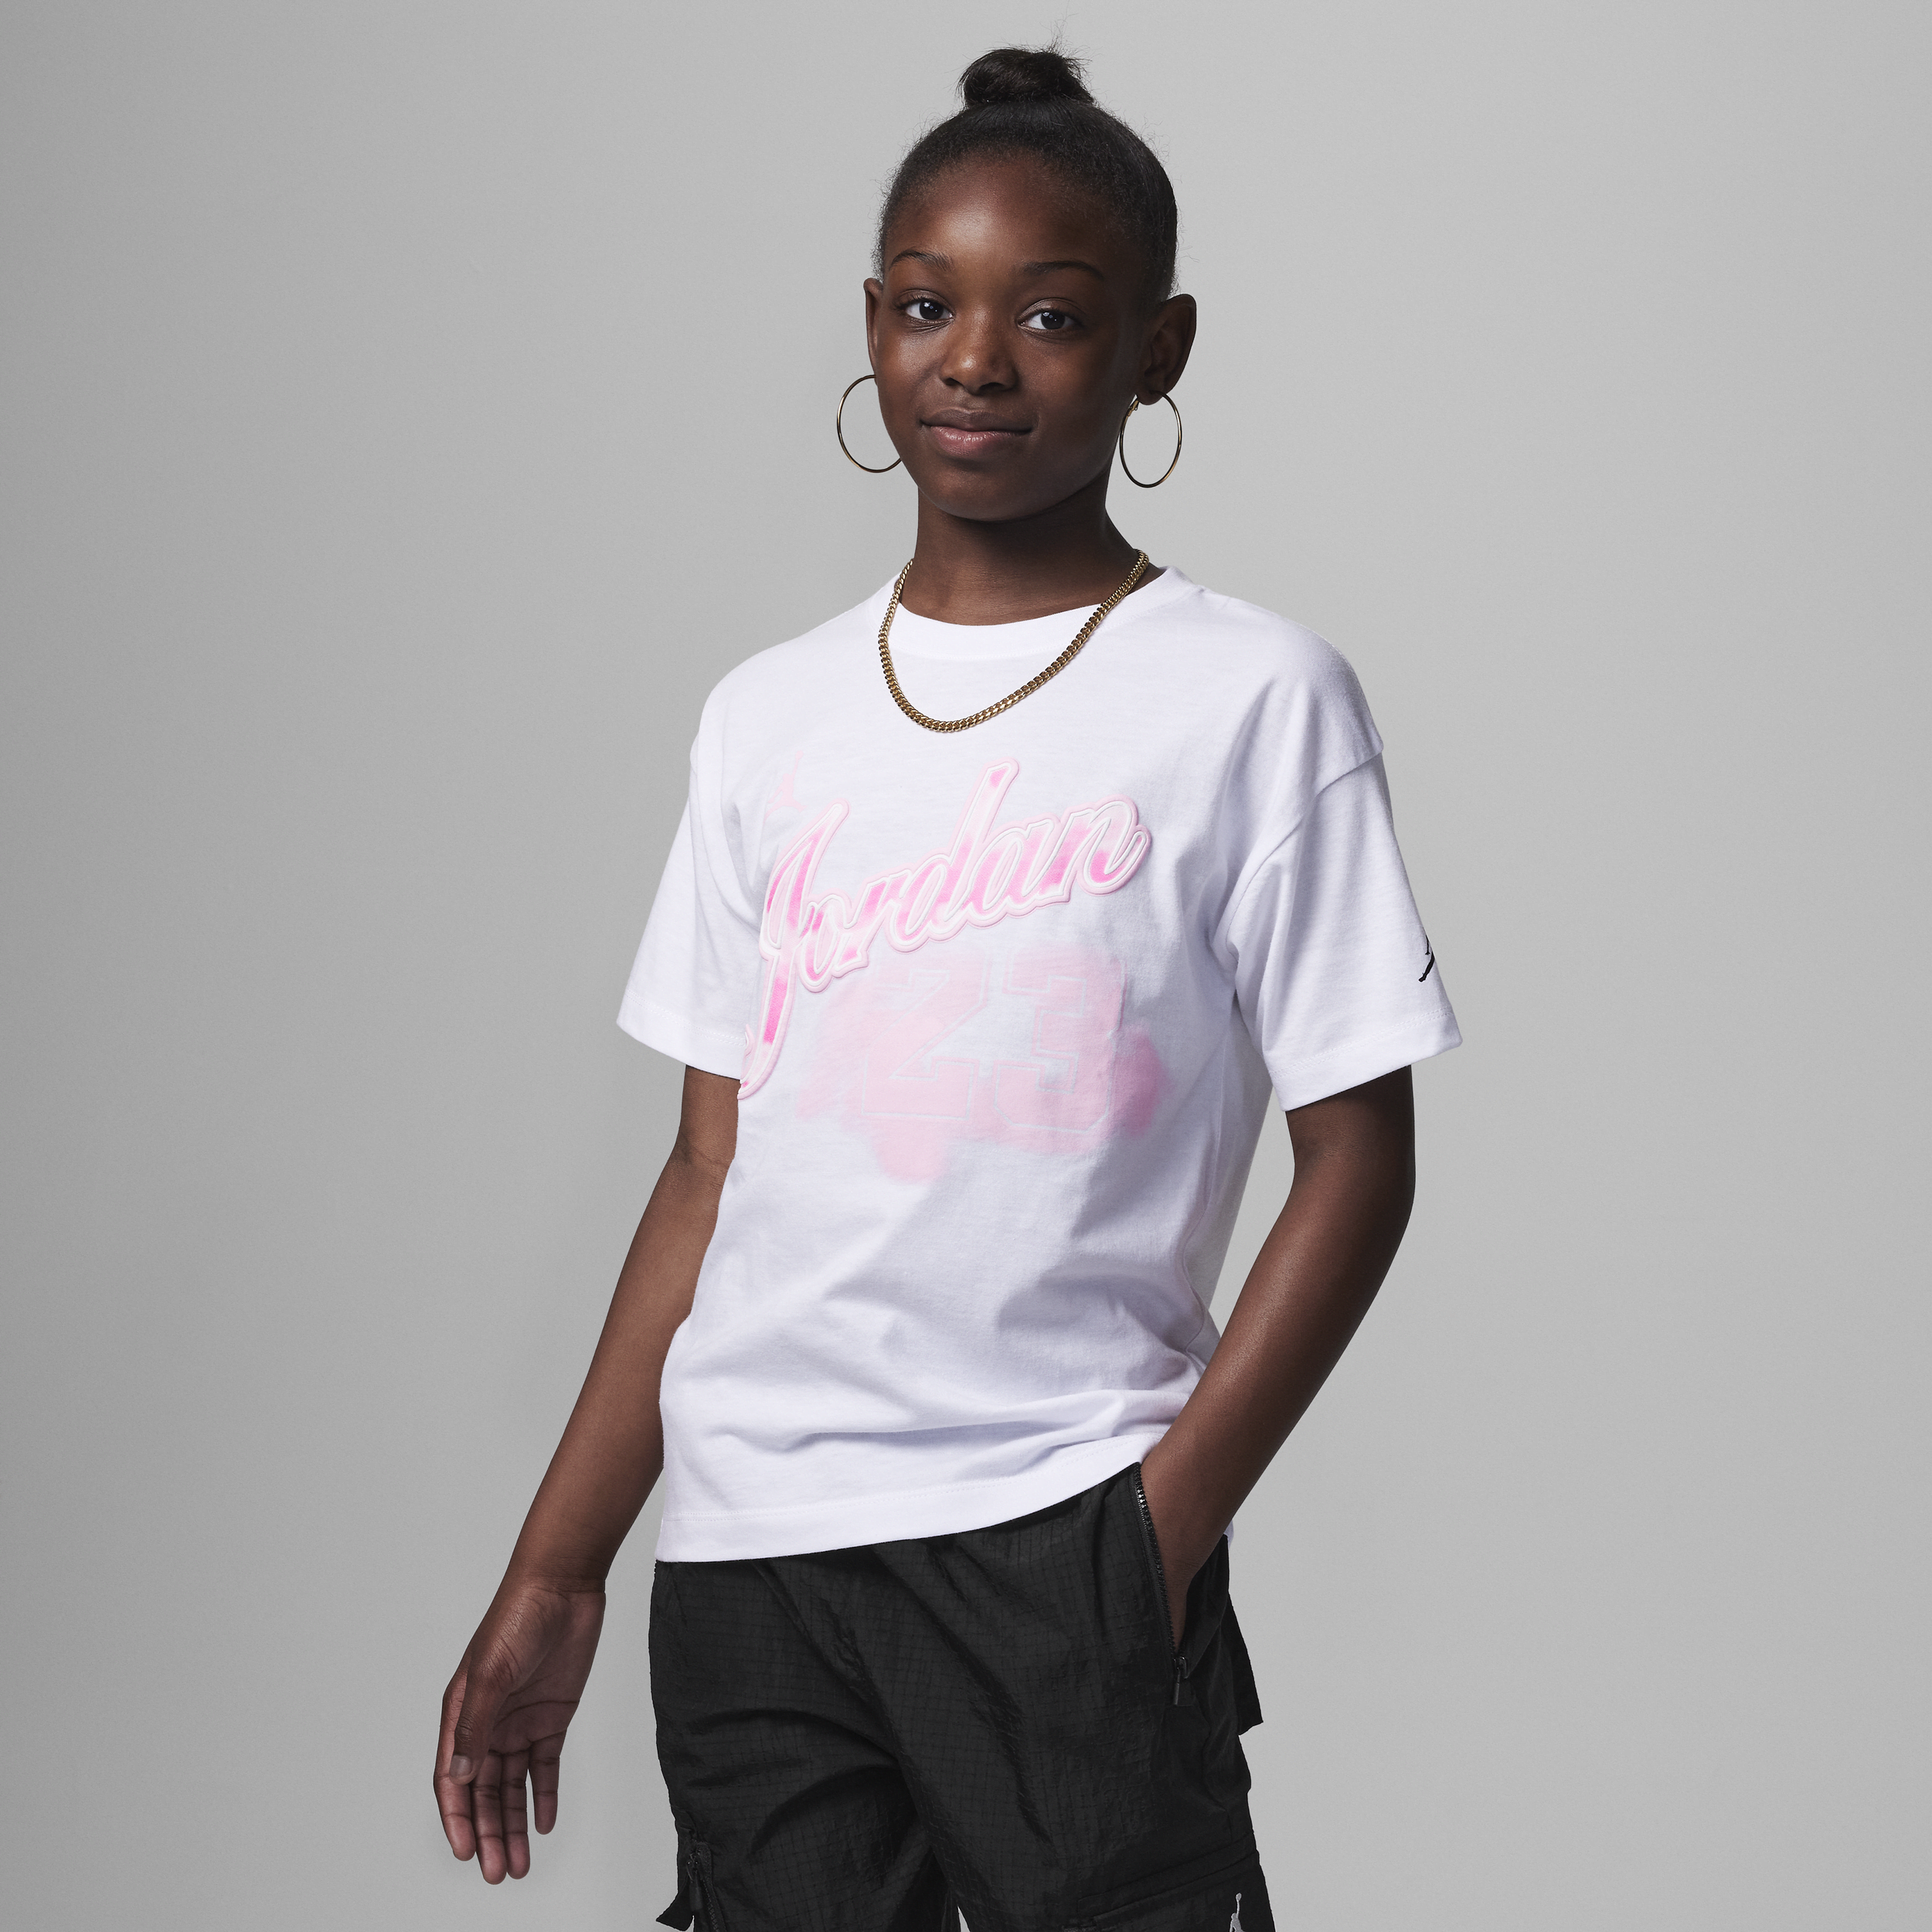 Jordan Rookie Sky Tee Camiseta - Niño/a - Blanco